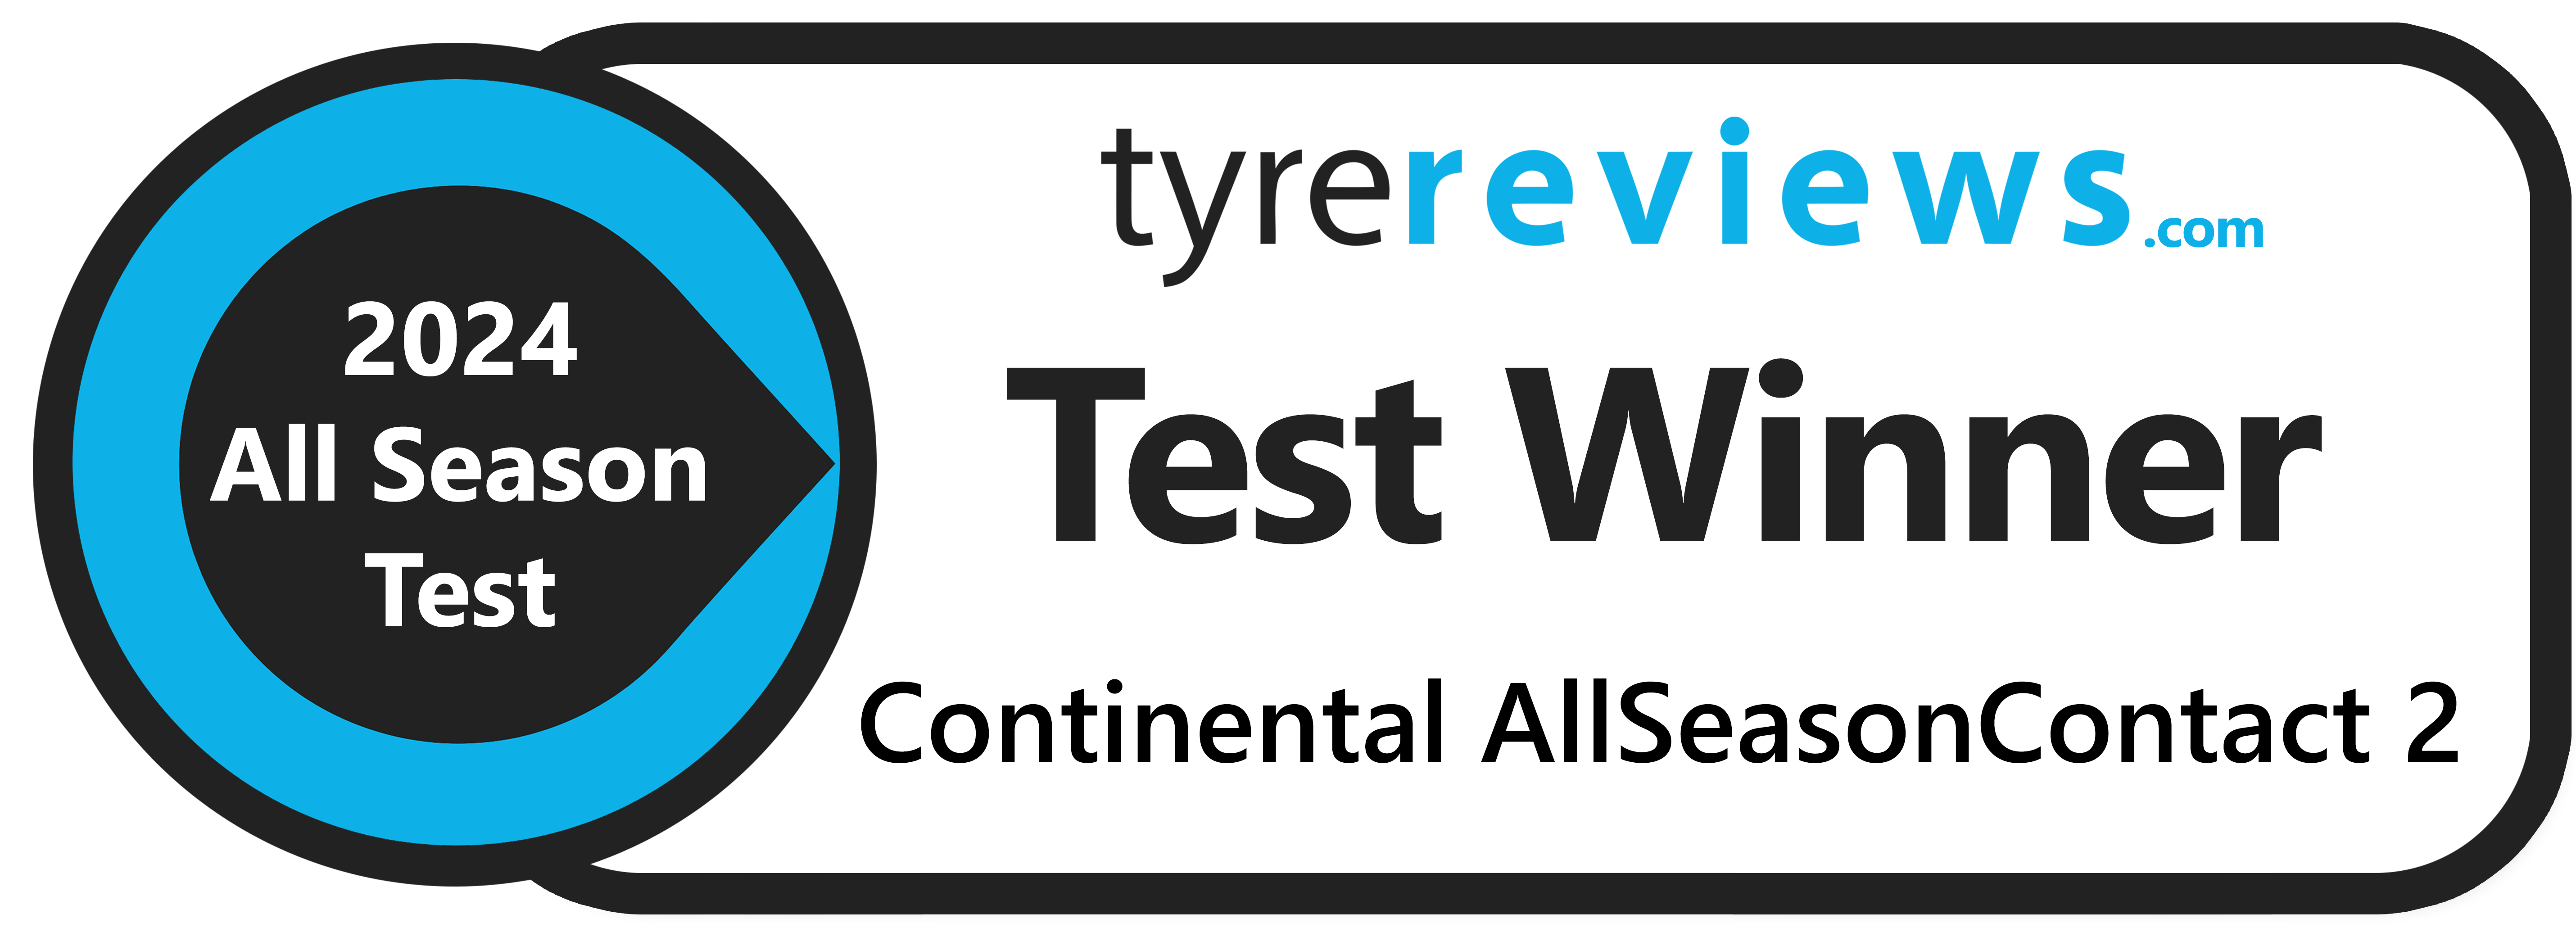 Continental AllSeasonContact 2 Test winner